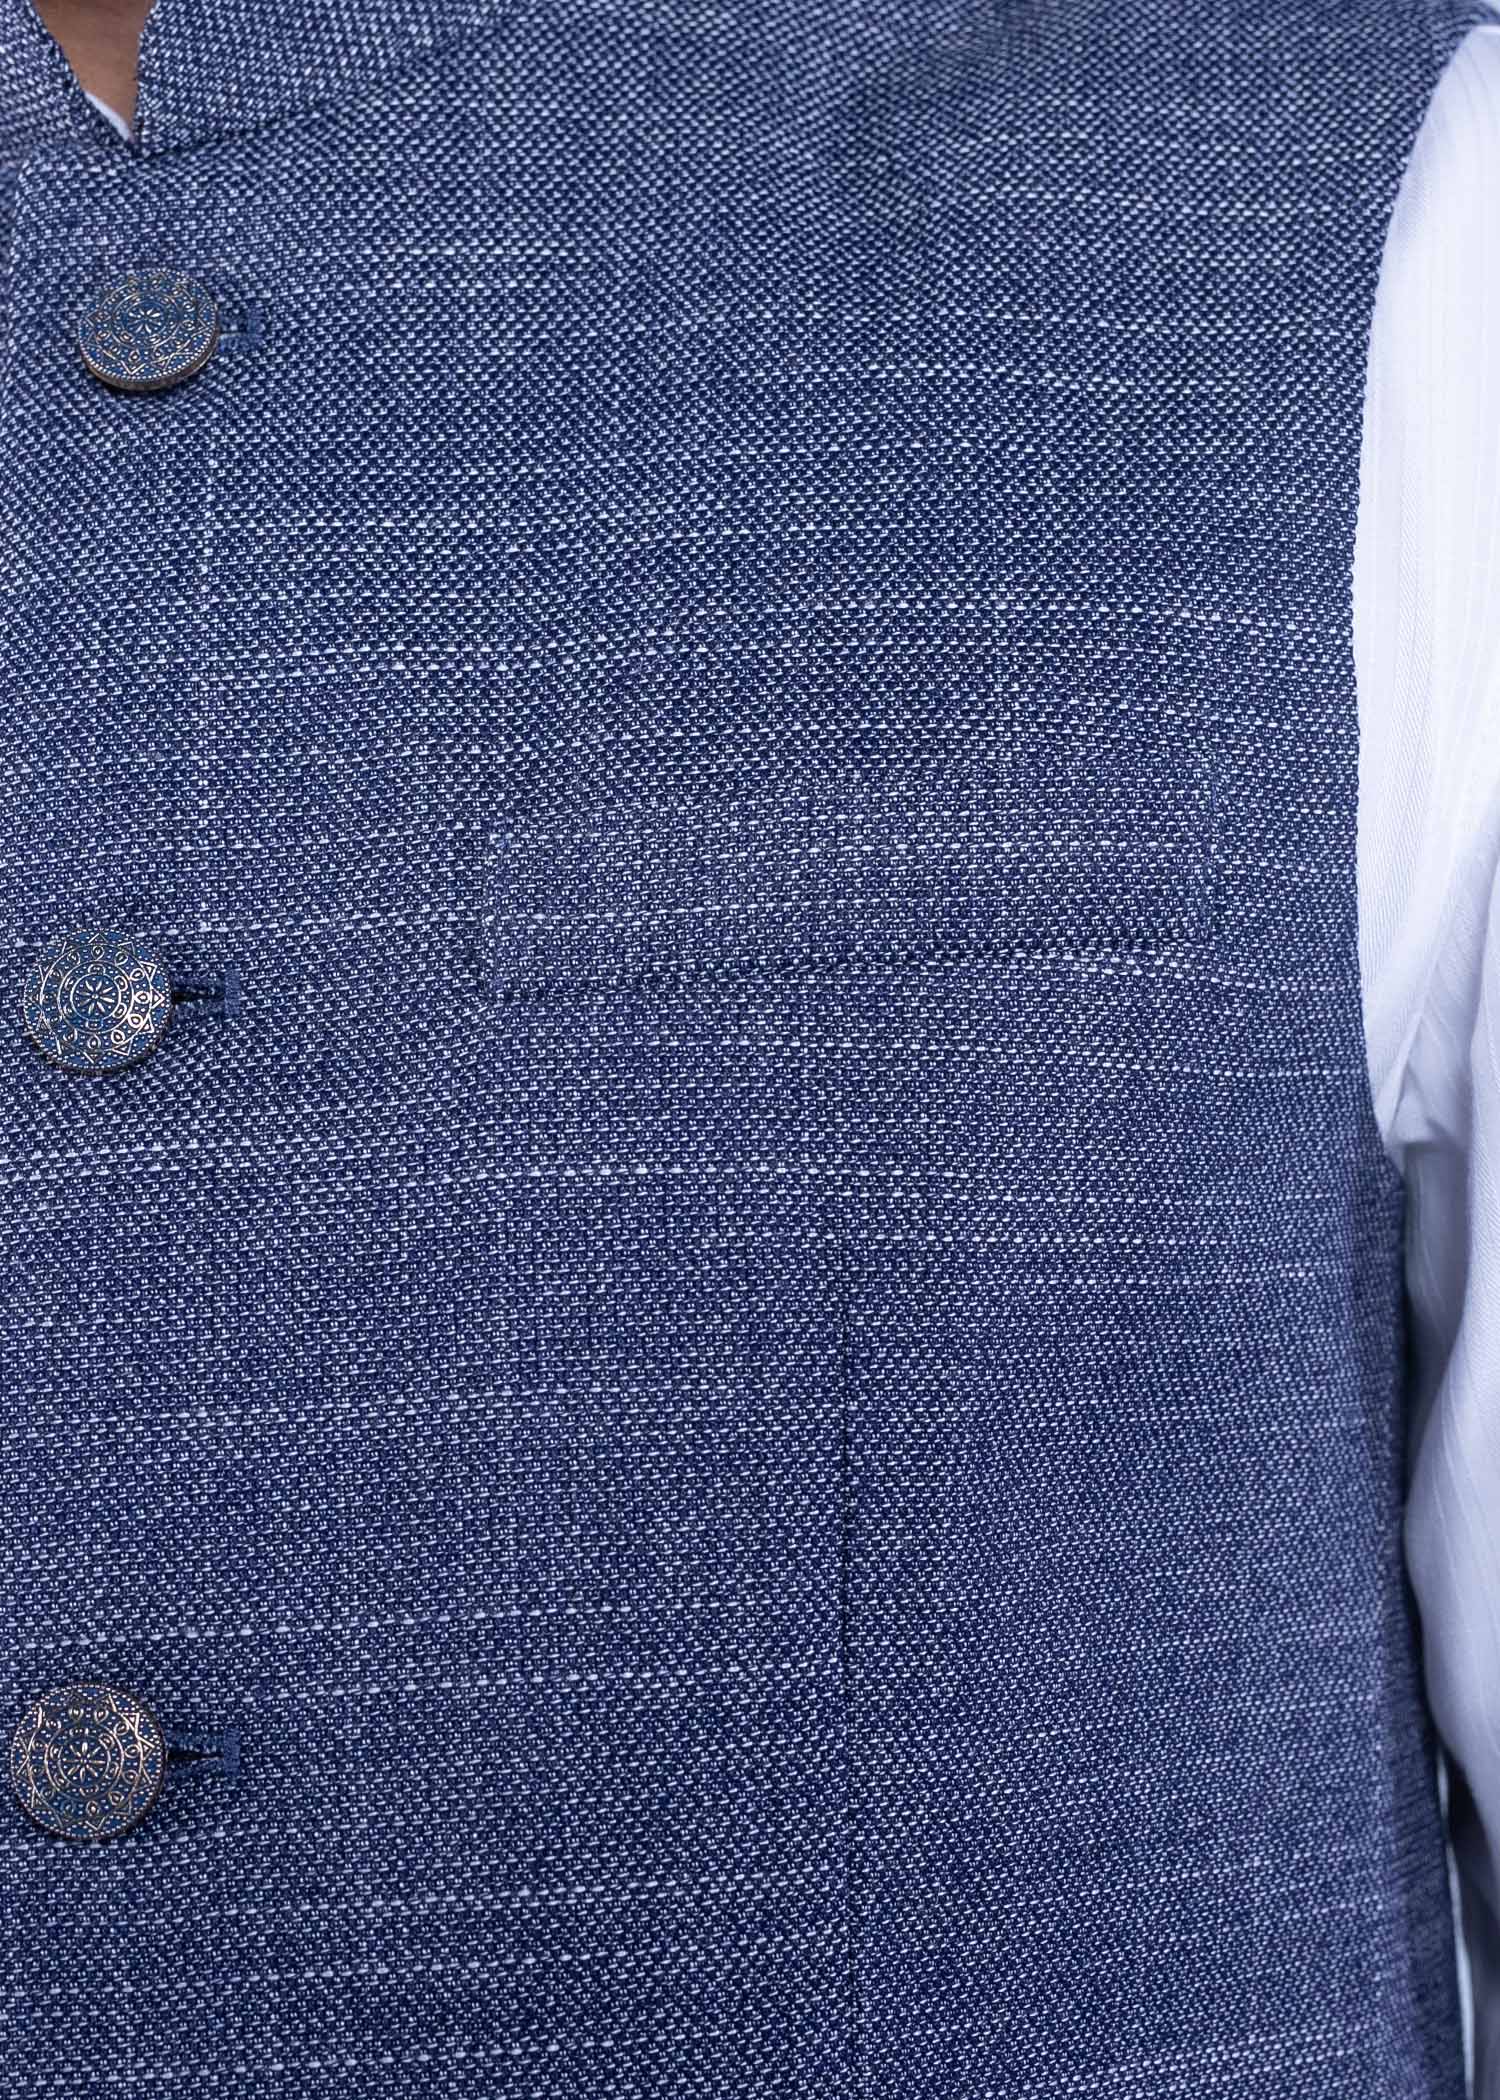 rawalpindi vest blue color close front view